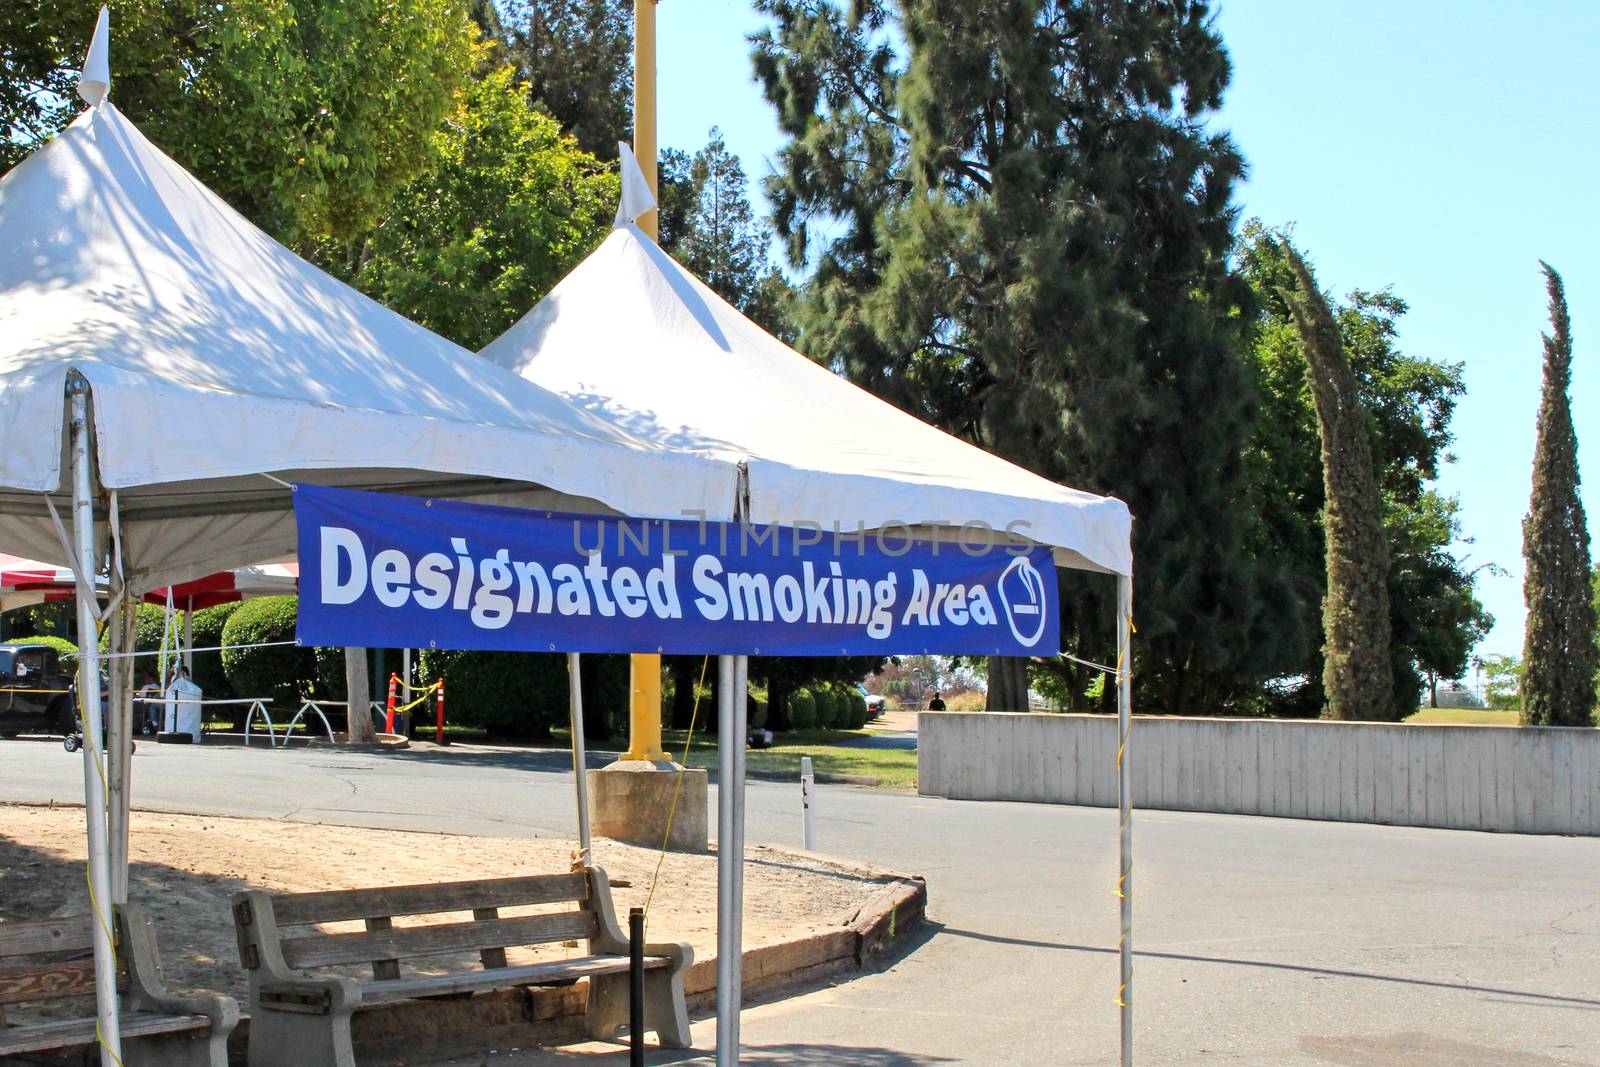 Designated smoking area by ziss